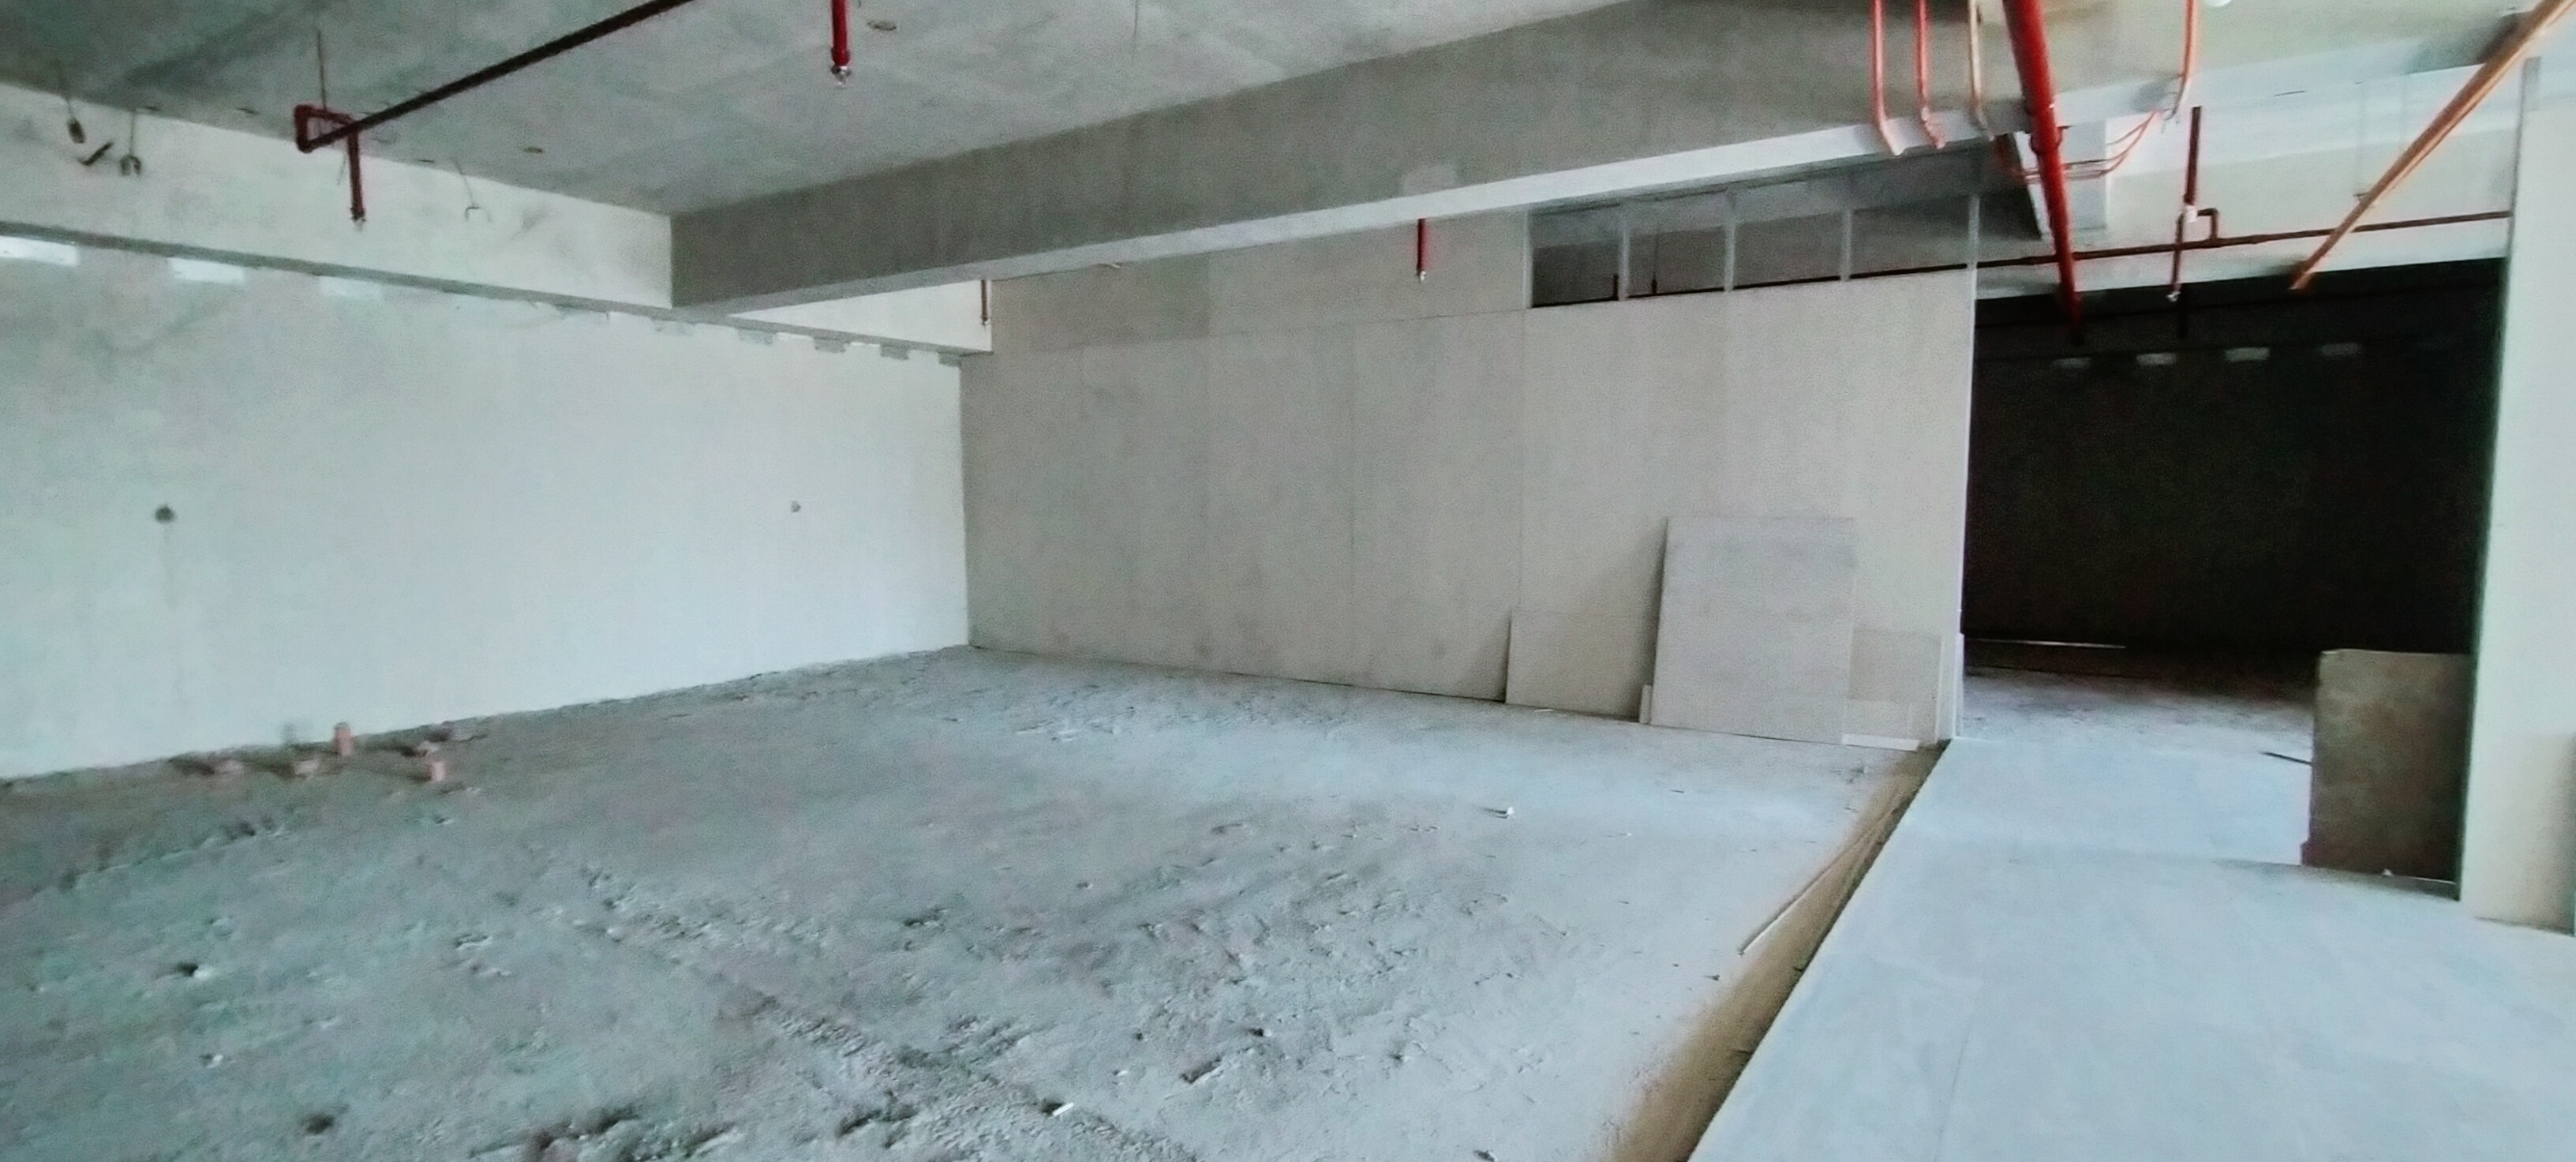 159-square-meters-office-space-located-in-banilad-cebu-city